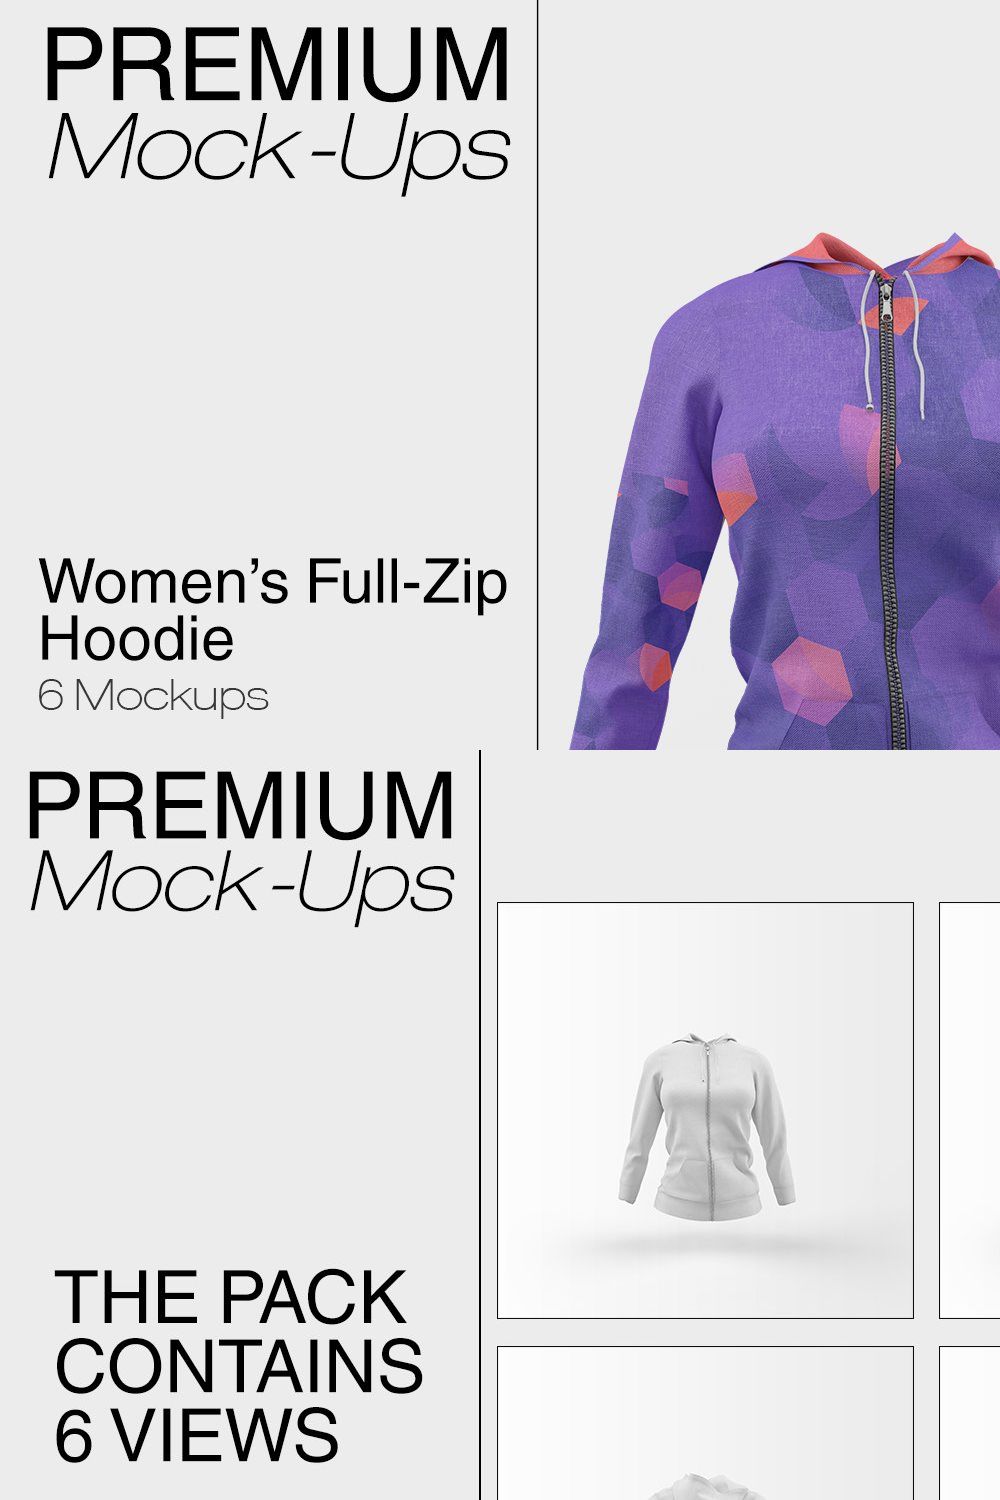 Women's Full-Zip Hoodie Mockup pinterest preview image.